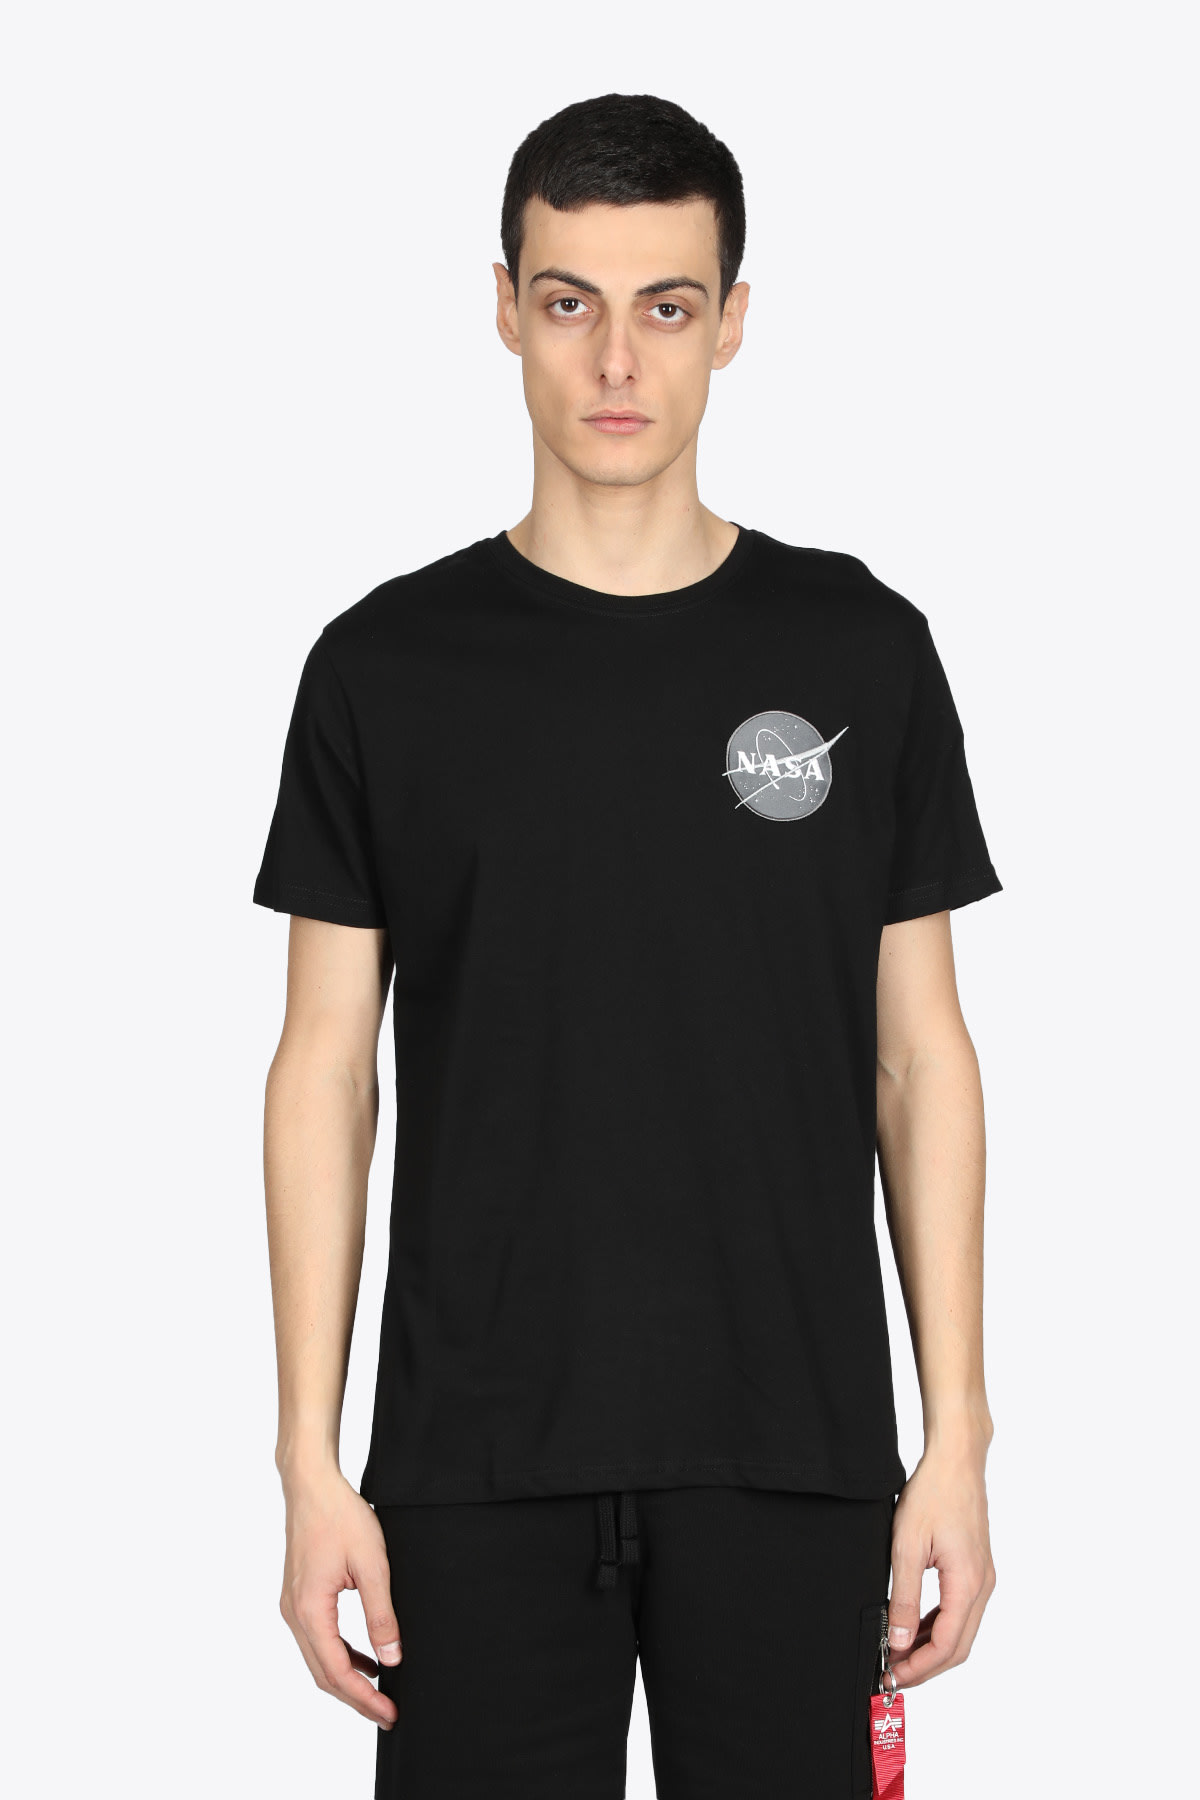 Alpha Industries Space Shuttle T-shirt Black cotton Nasa t-shirt - Space Shuttle T-Shirt